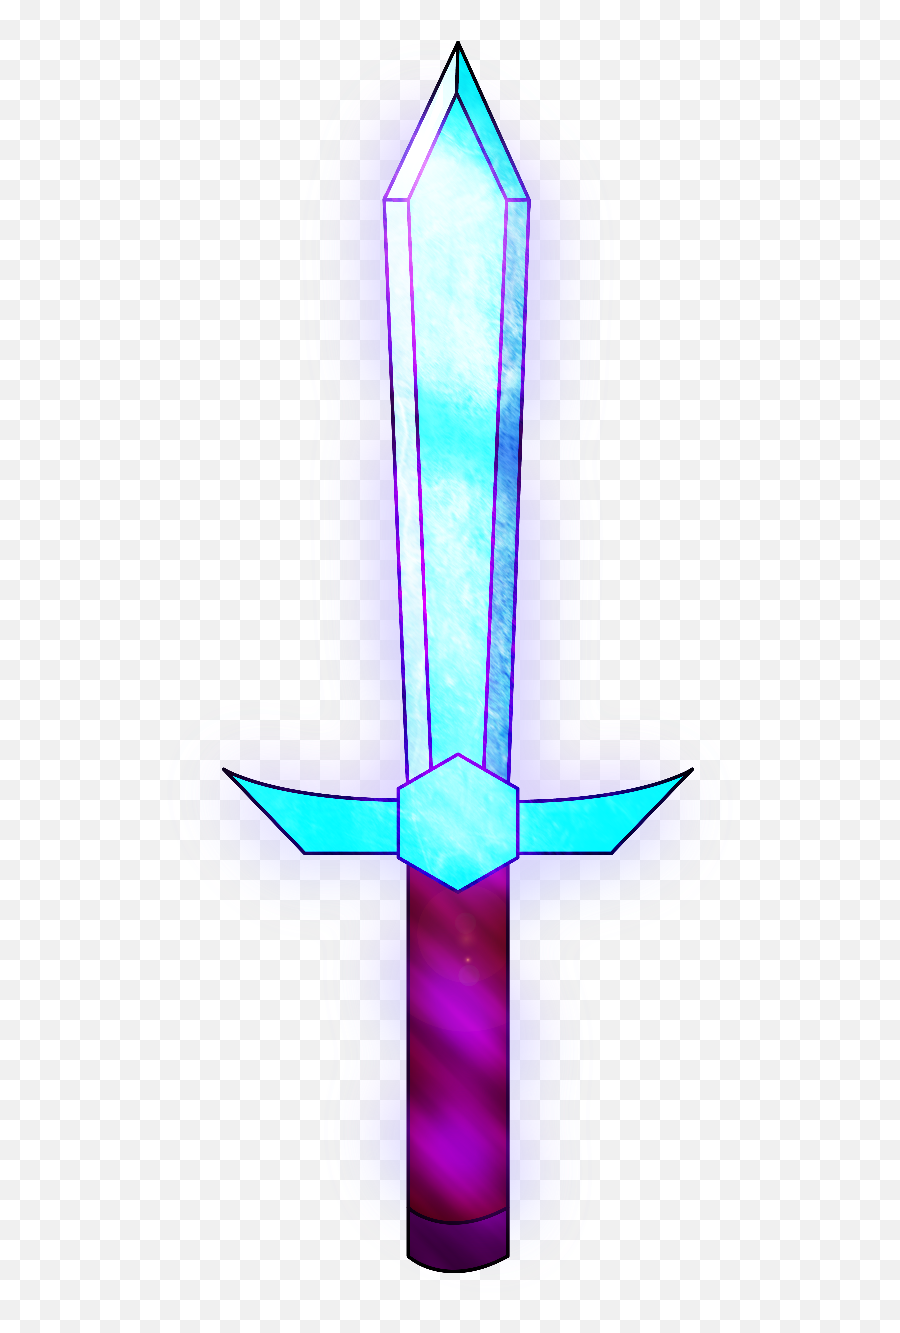 enchanted iron sword minecraft